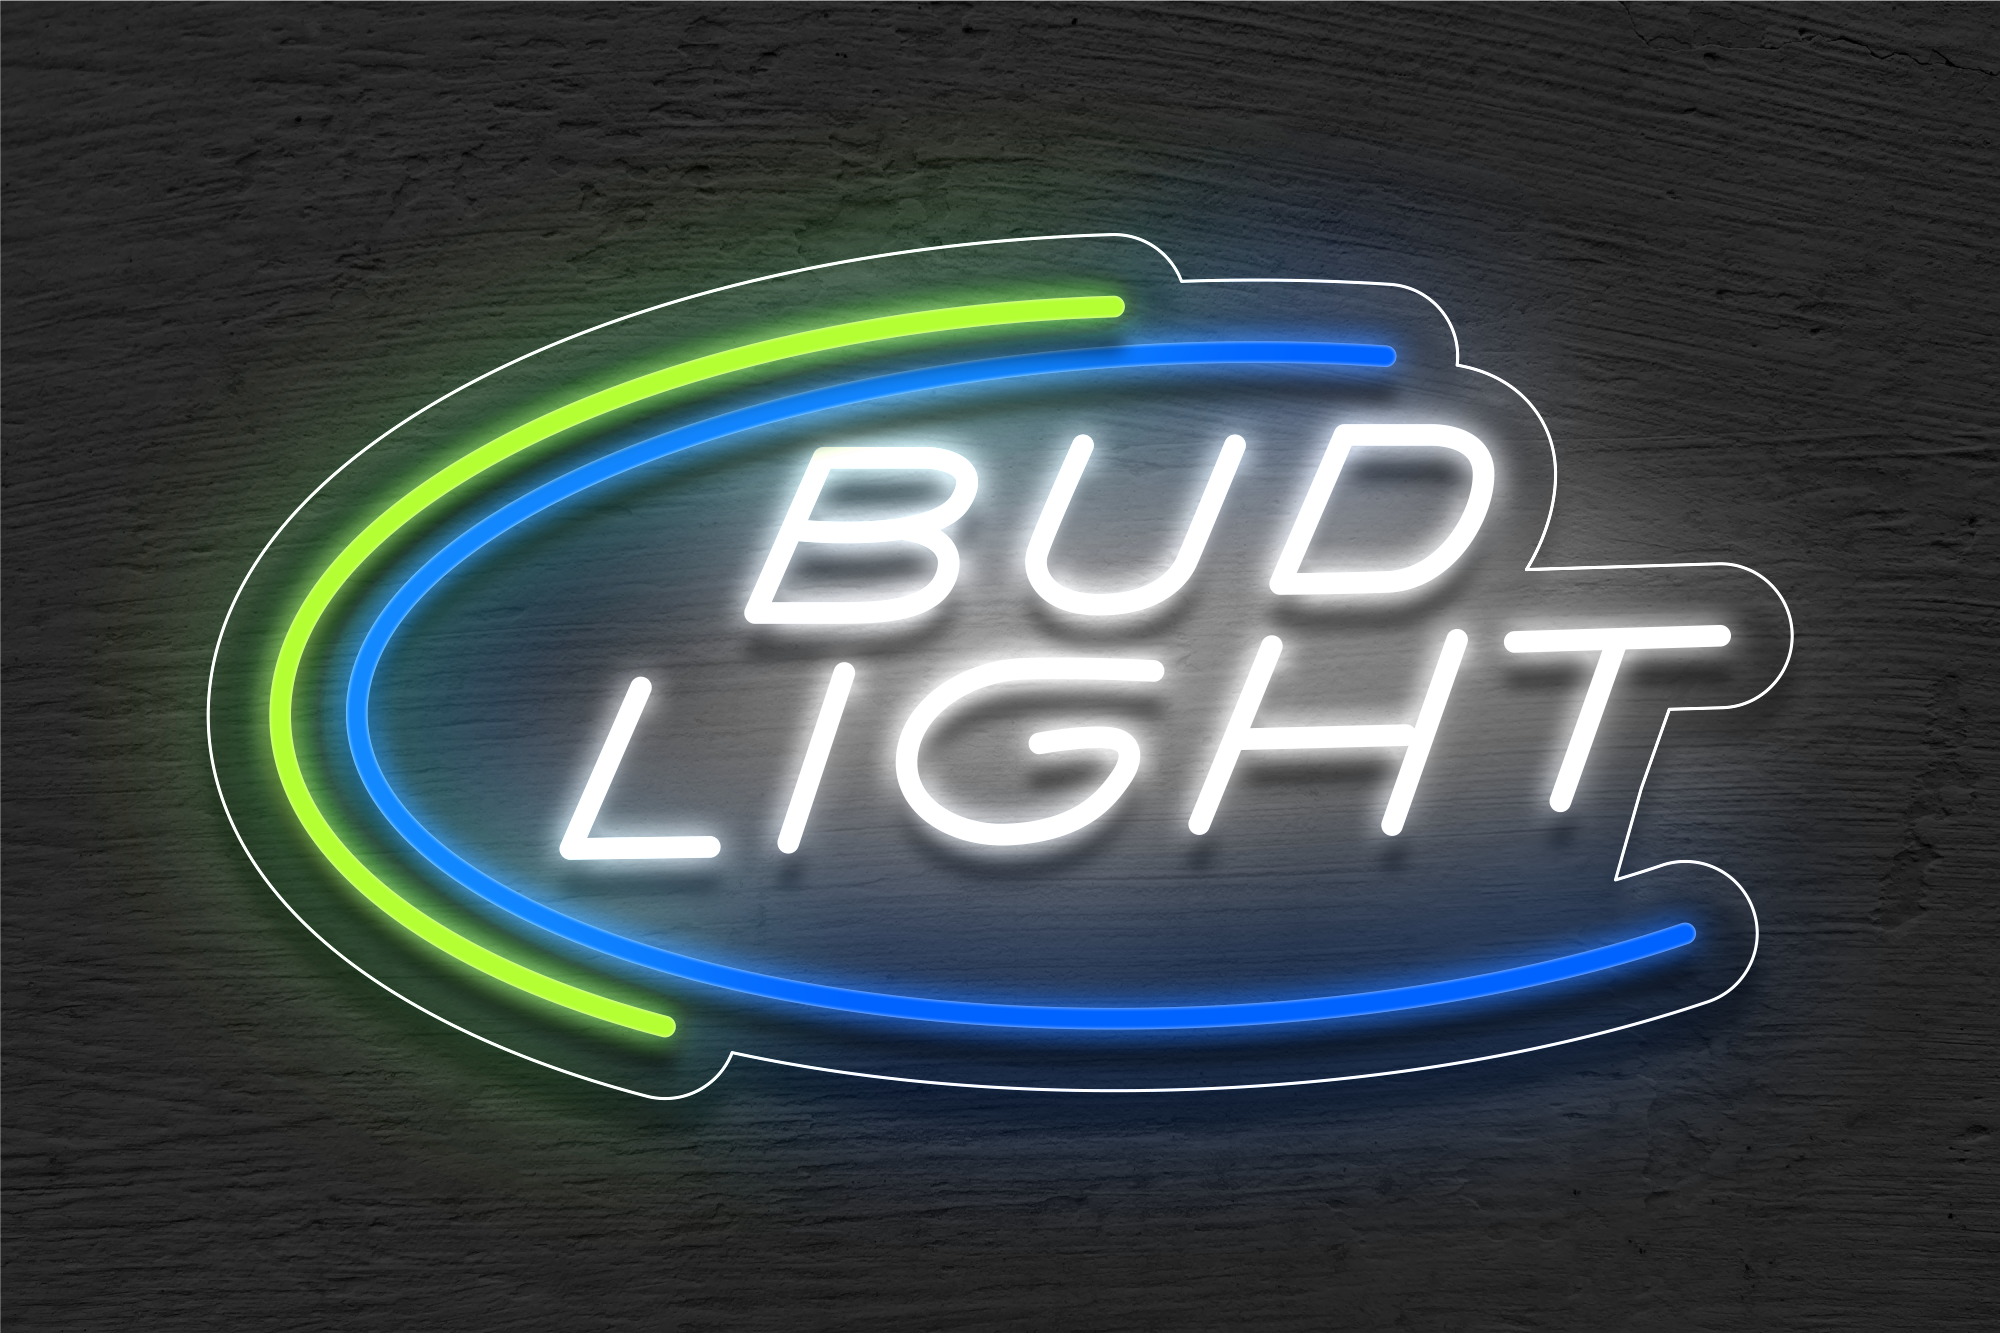 "Bud Light" with 2 Arcs LED Neon Sign